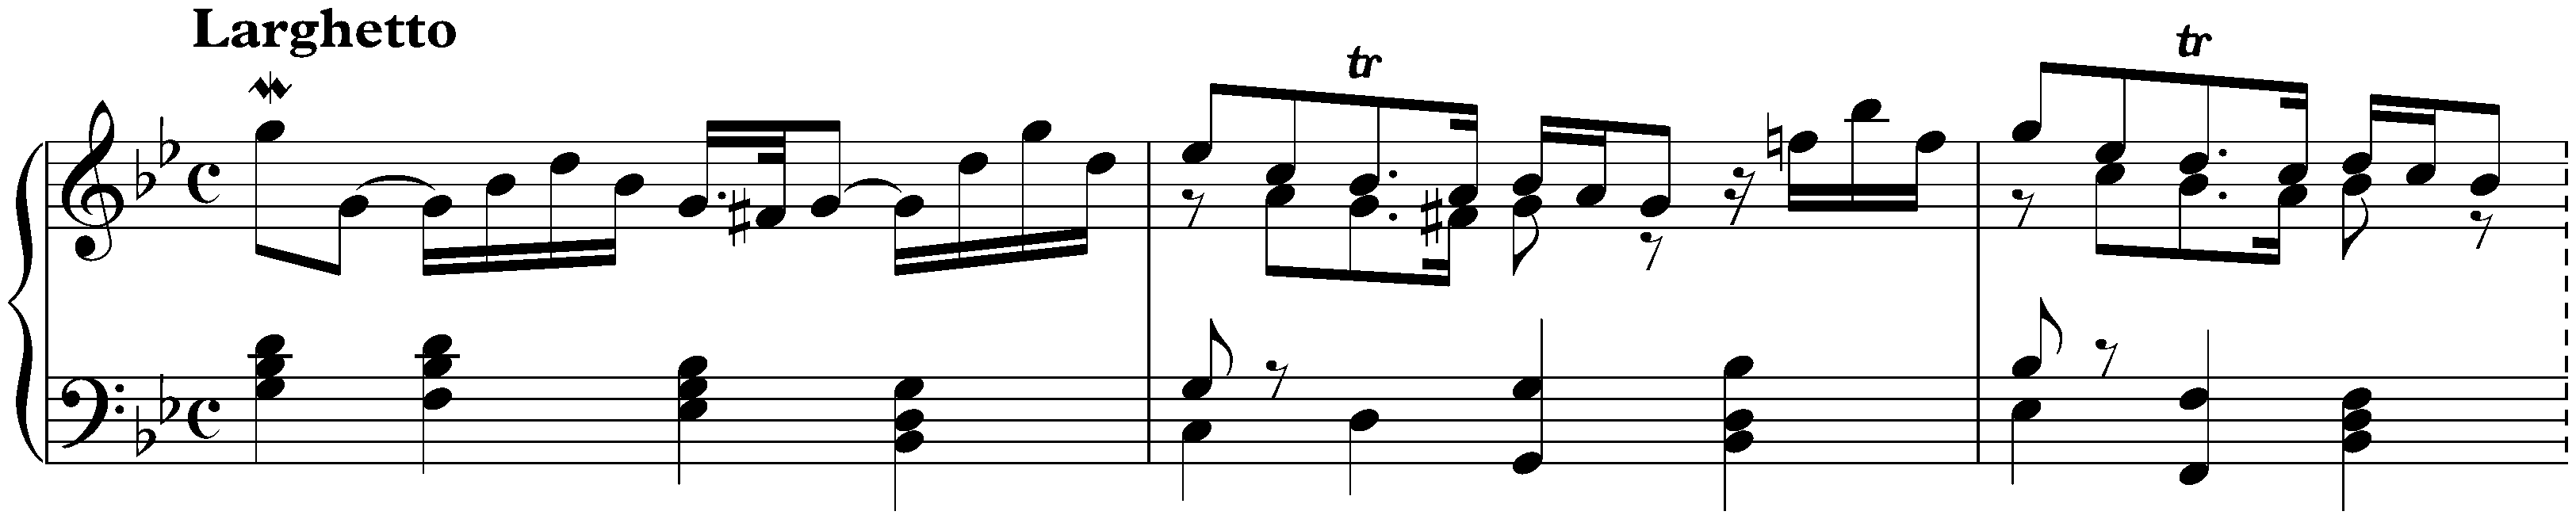 Sonata in G minor, HWV 580